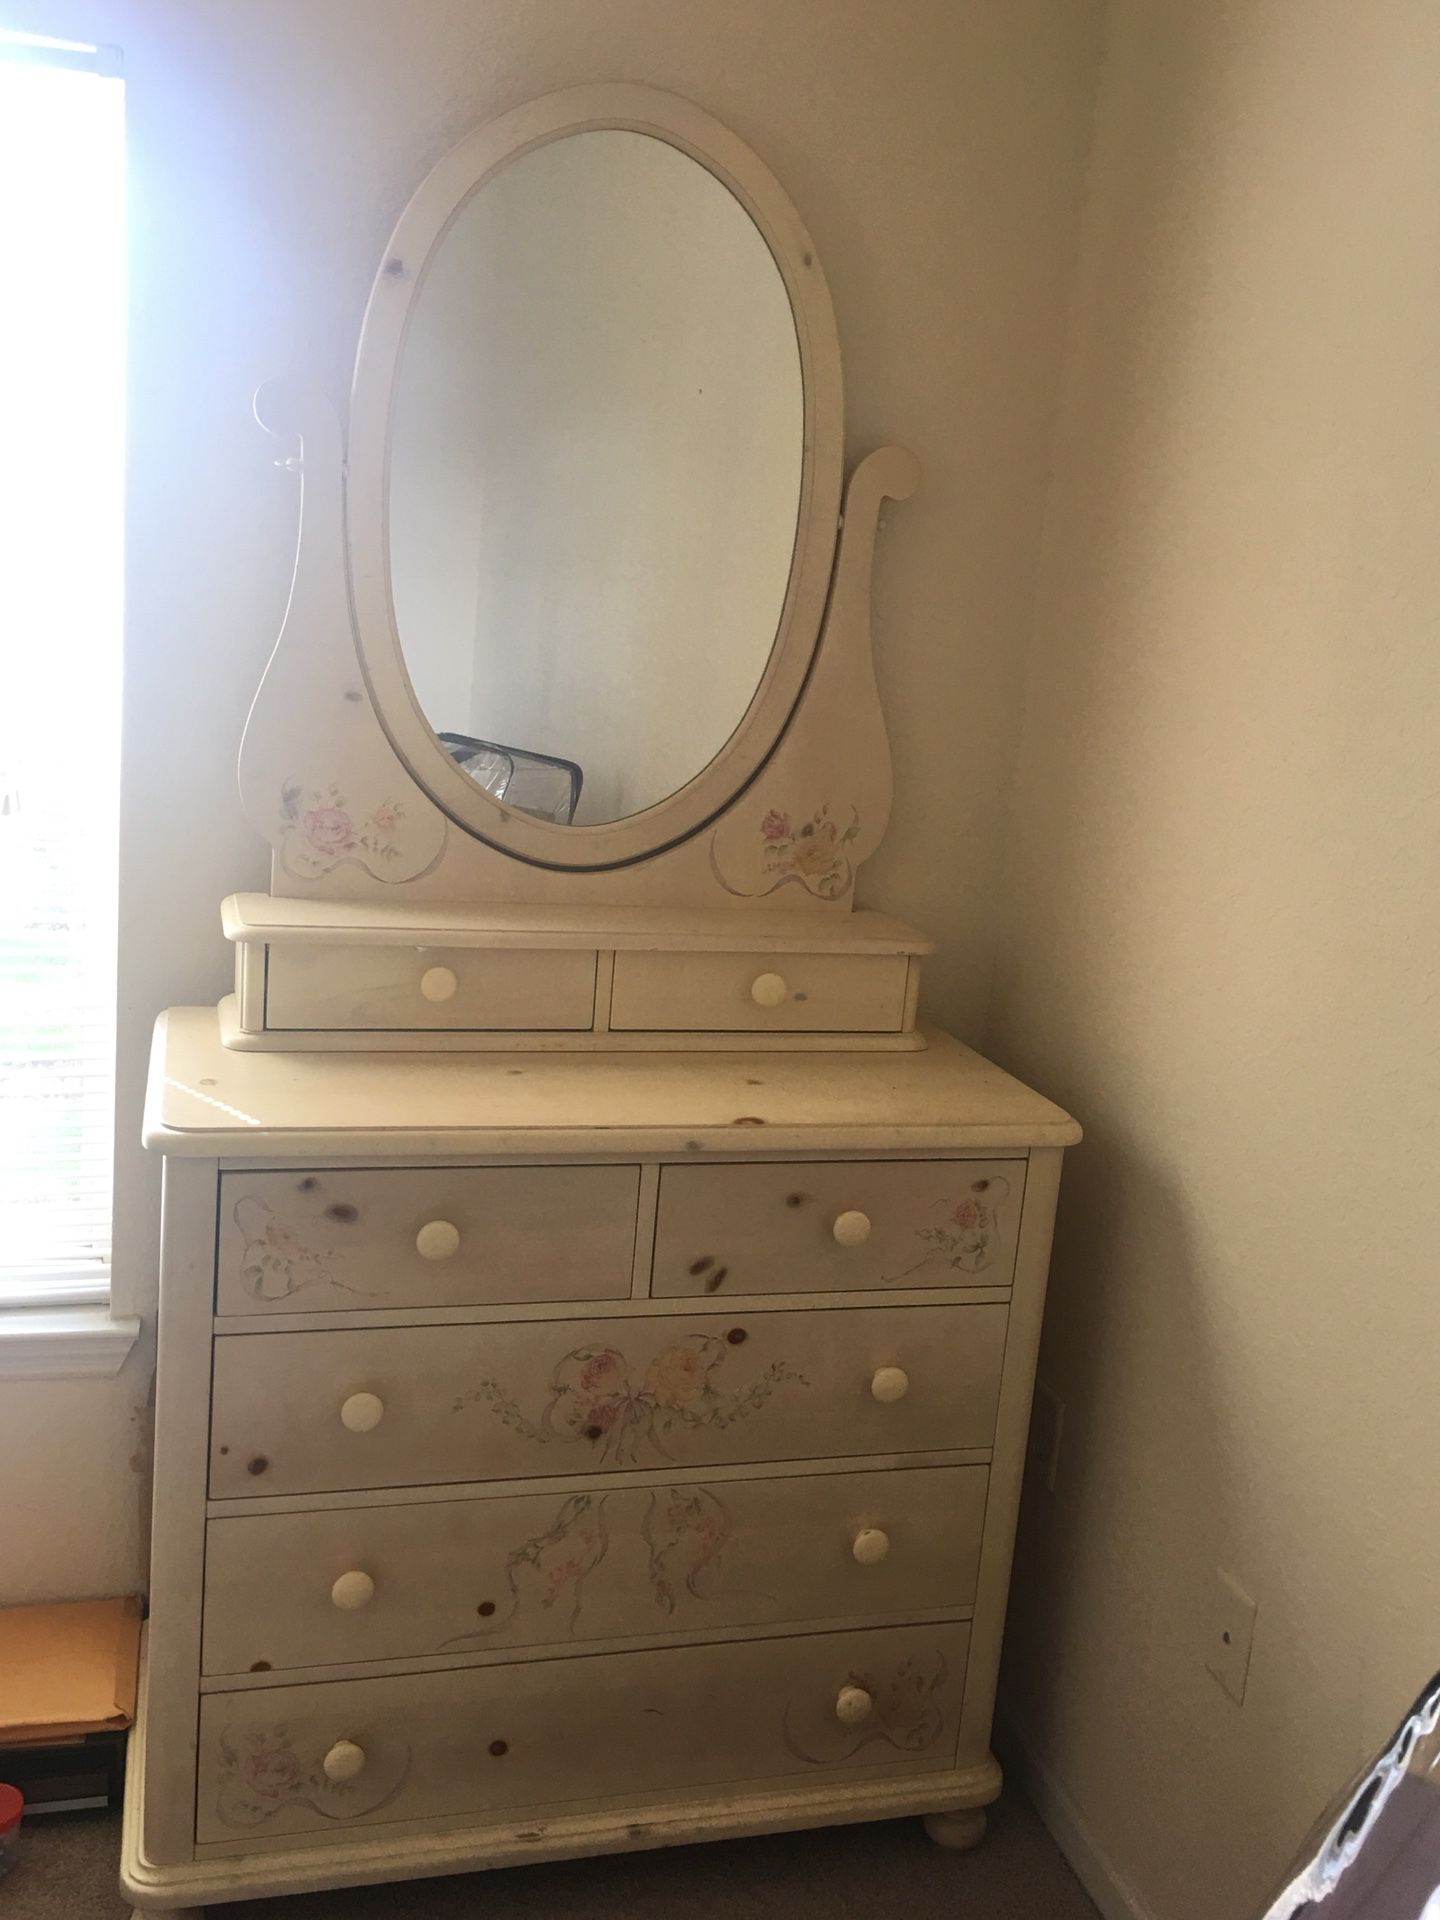 Antique Solid Wooden Dresser - excellent condition